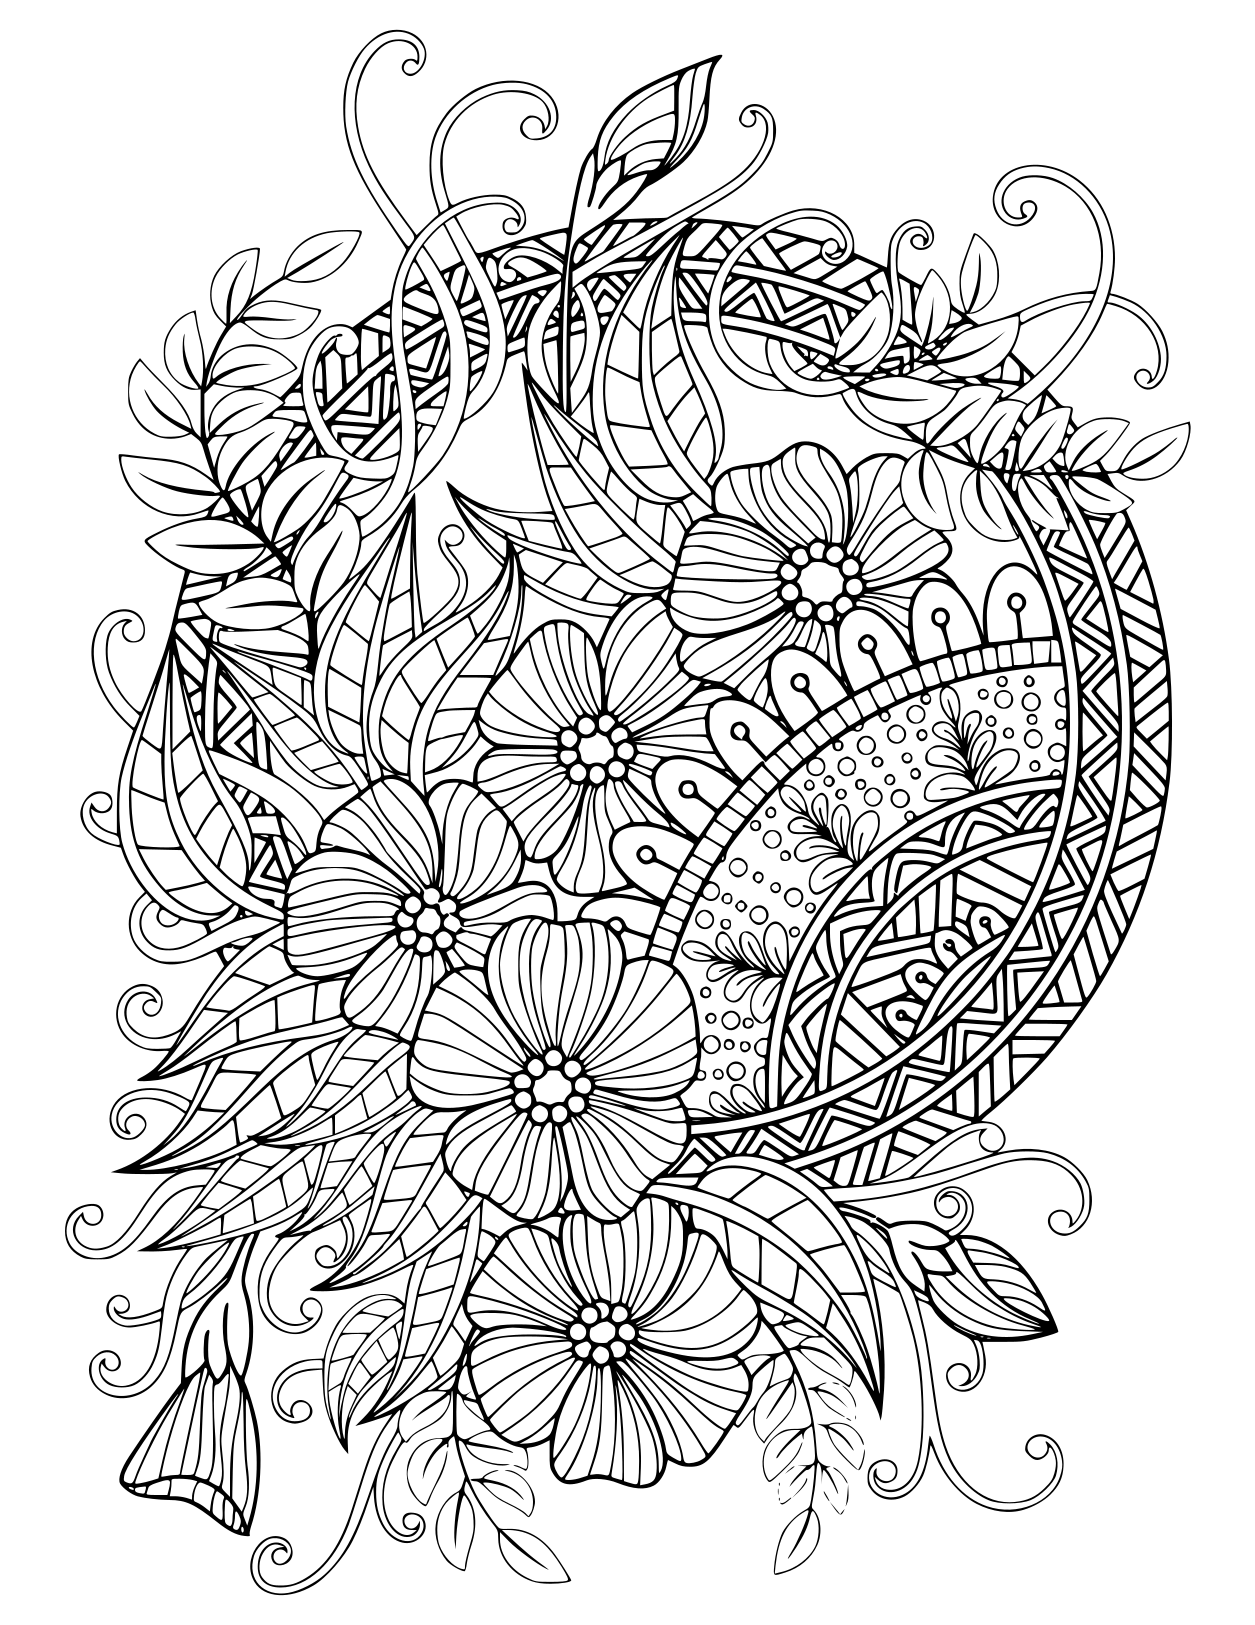 Mandala Adult Floral Nature 2020 Coloring Page